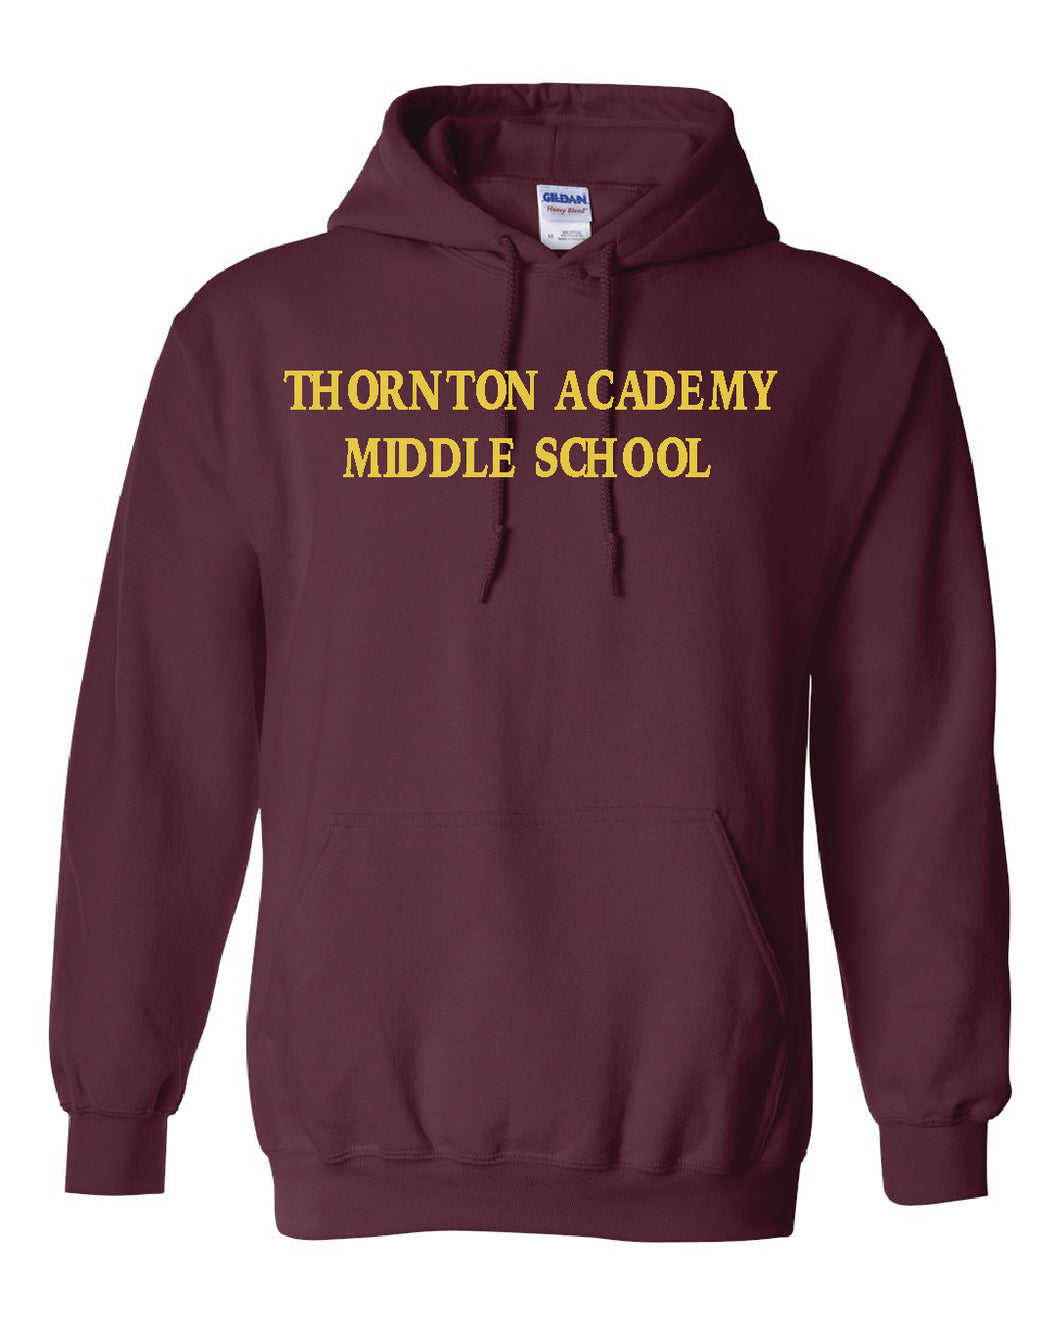 Maroon Adult Unisex Gildan Hooded Sweatshirt with Thornton Middle School Logo